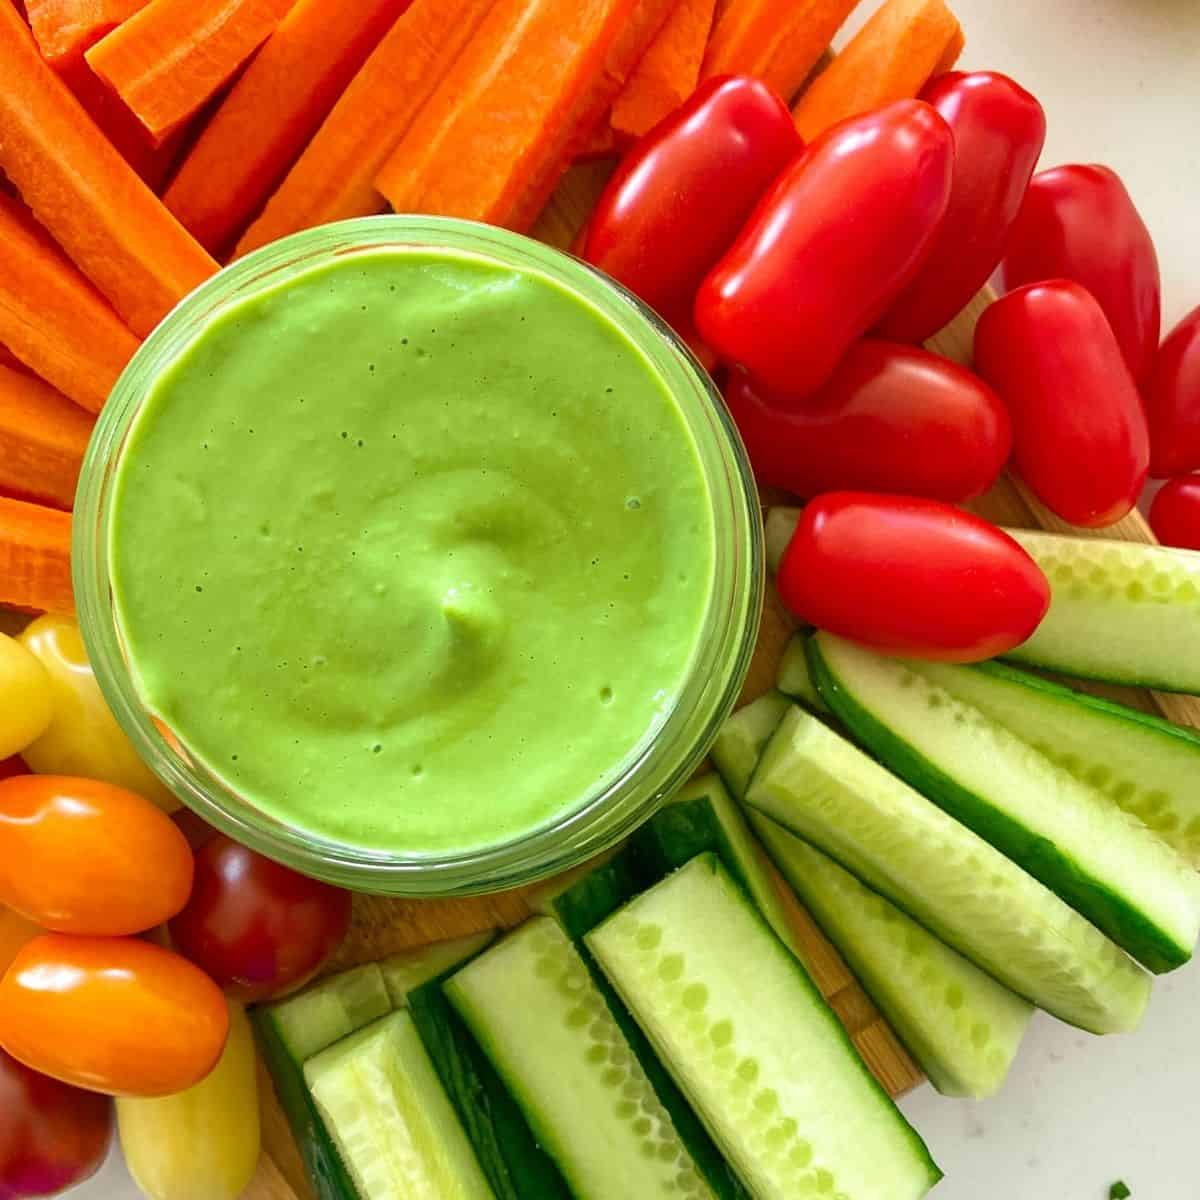 Green dip in glass jar with raw veggies surrounding it.